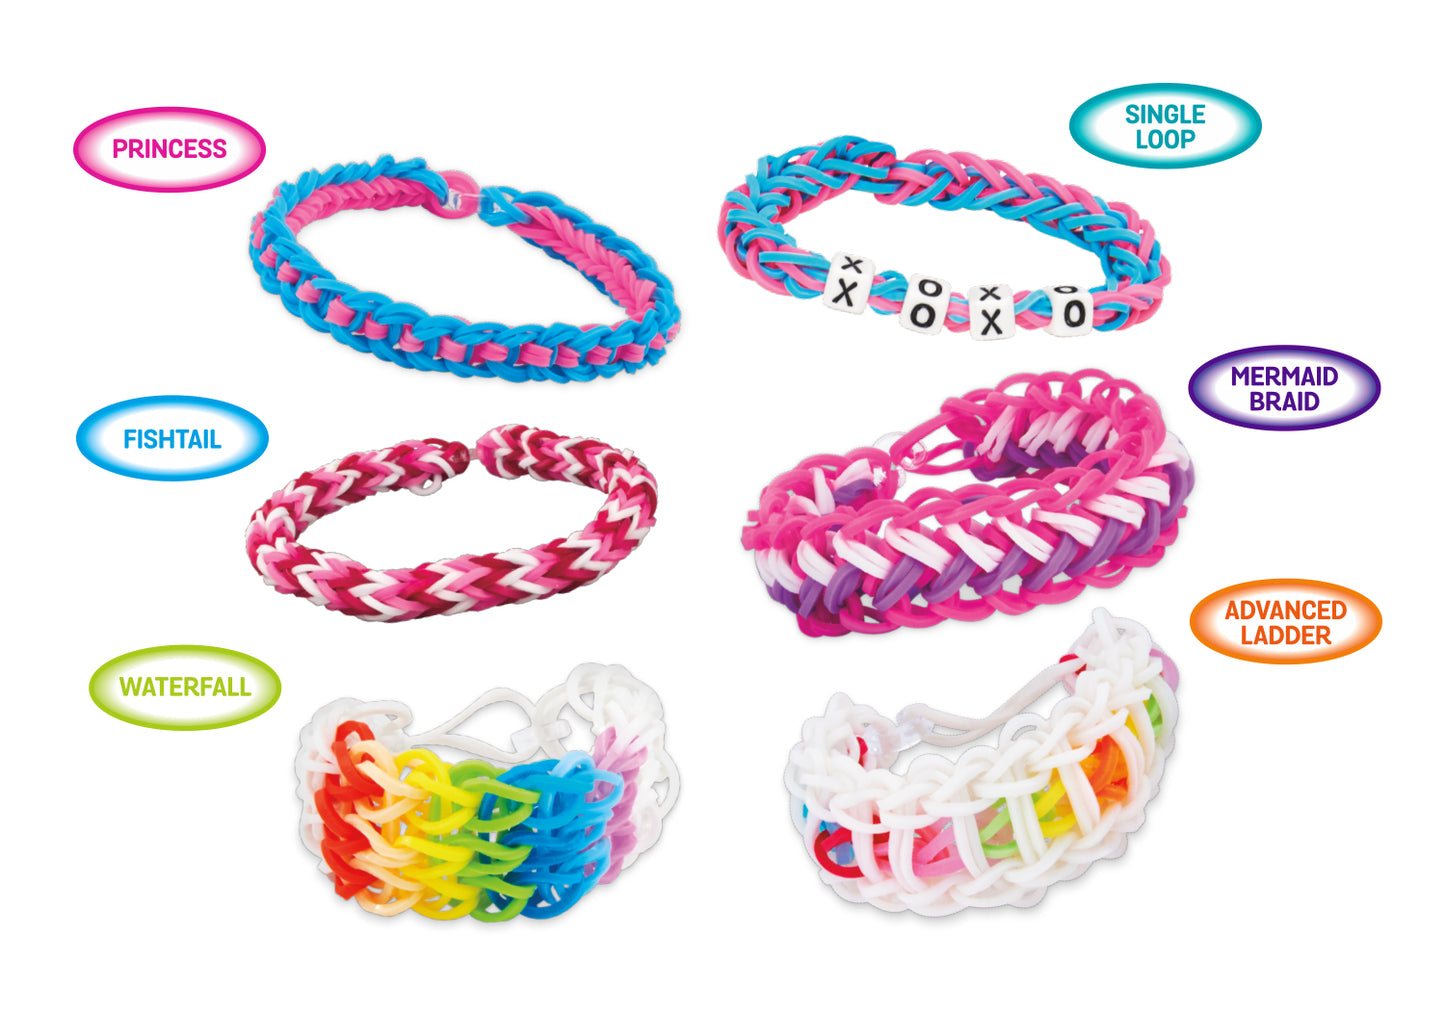 Cra-z Art Cra-z-loom Unicorn And Neon Rubber Band Bracelet-making Set, Arts & Crafts